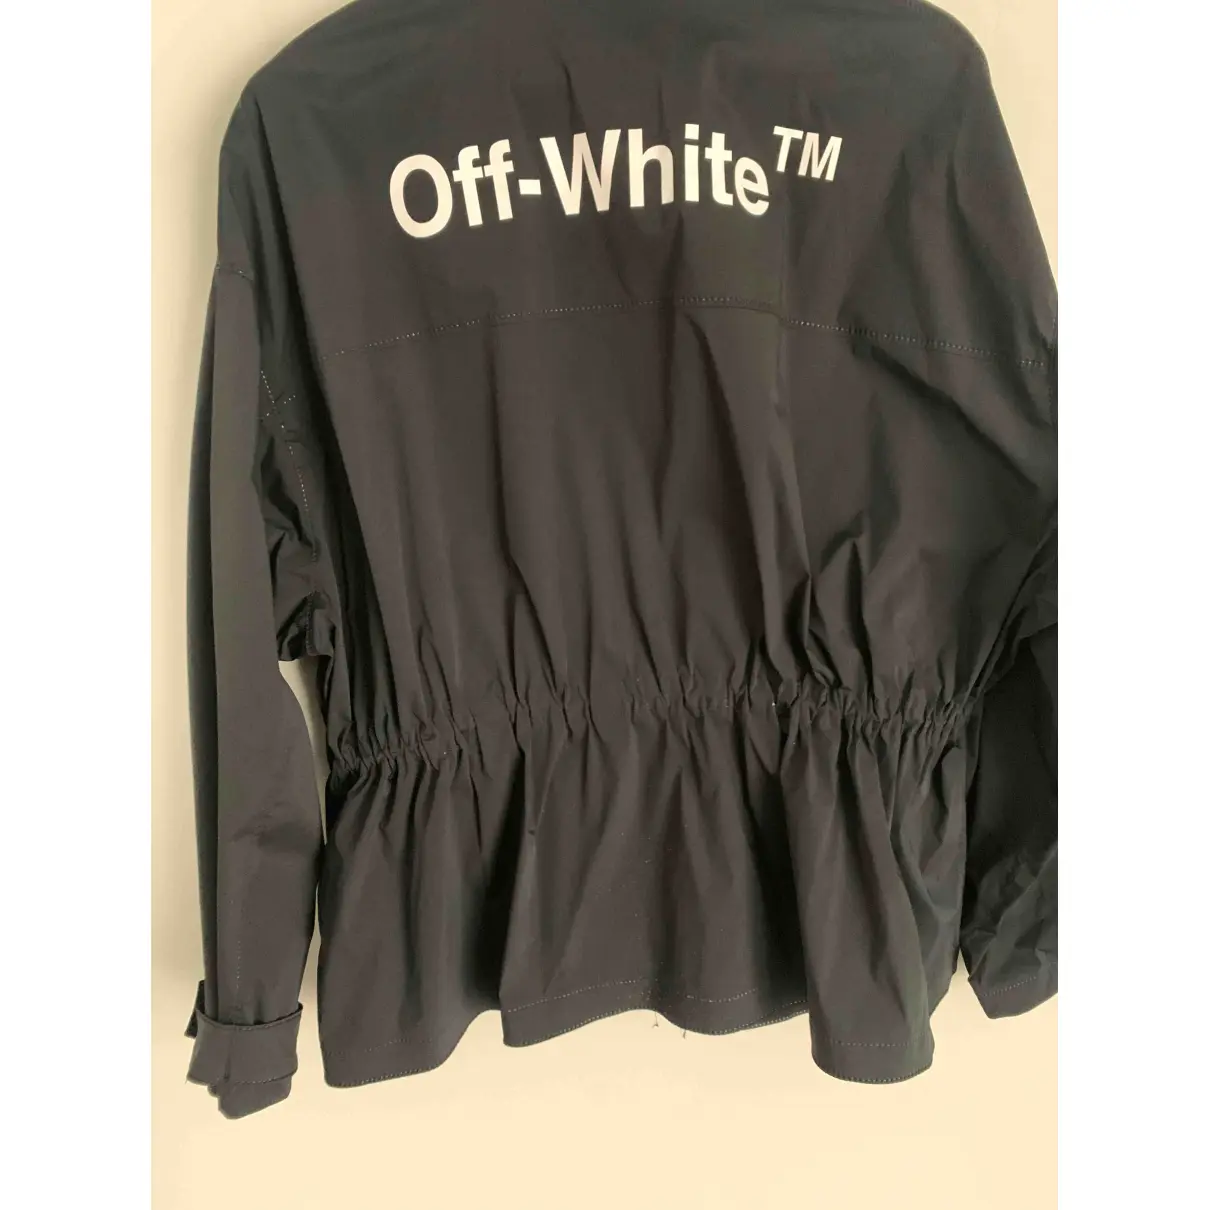 Buy Off-White Coat online